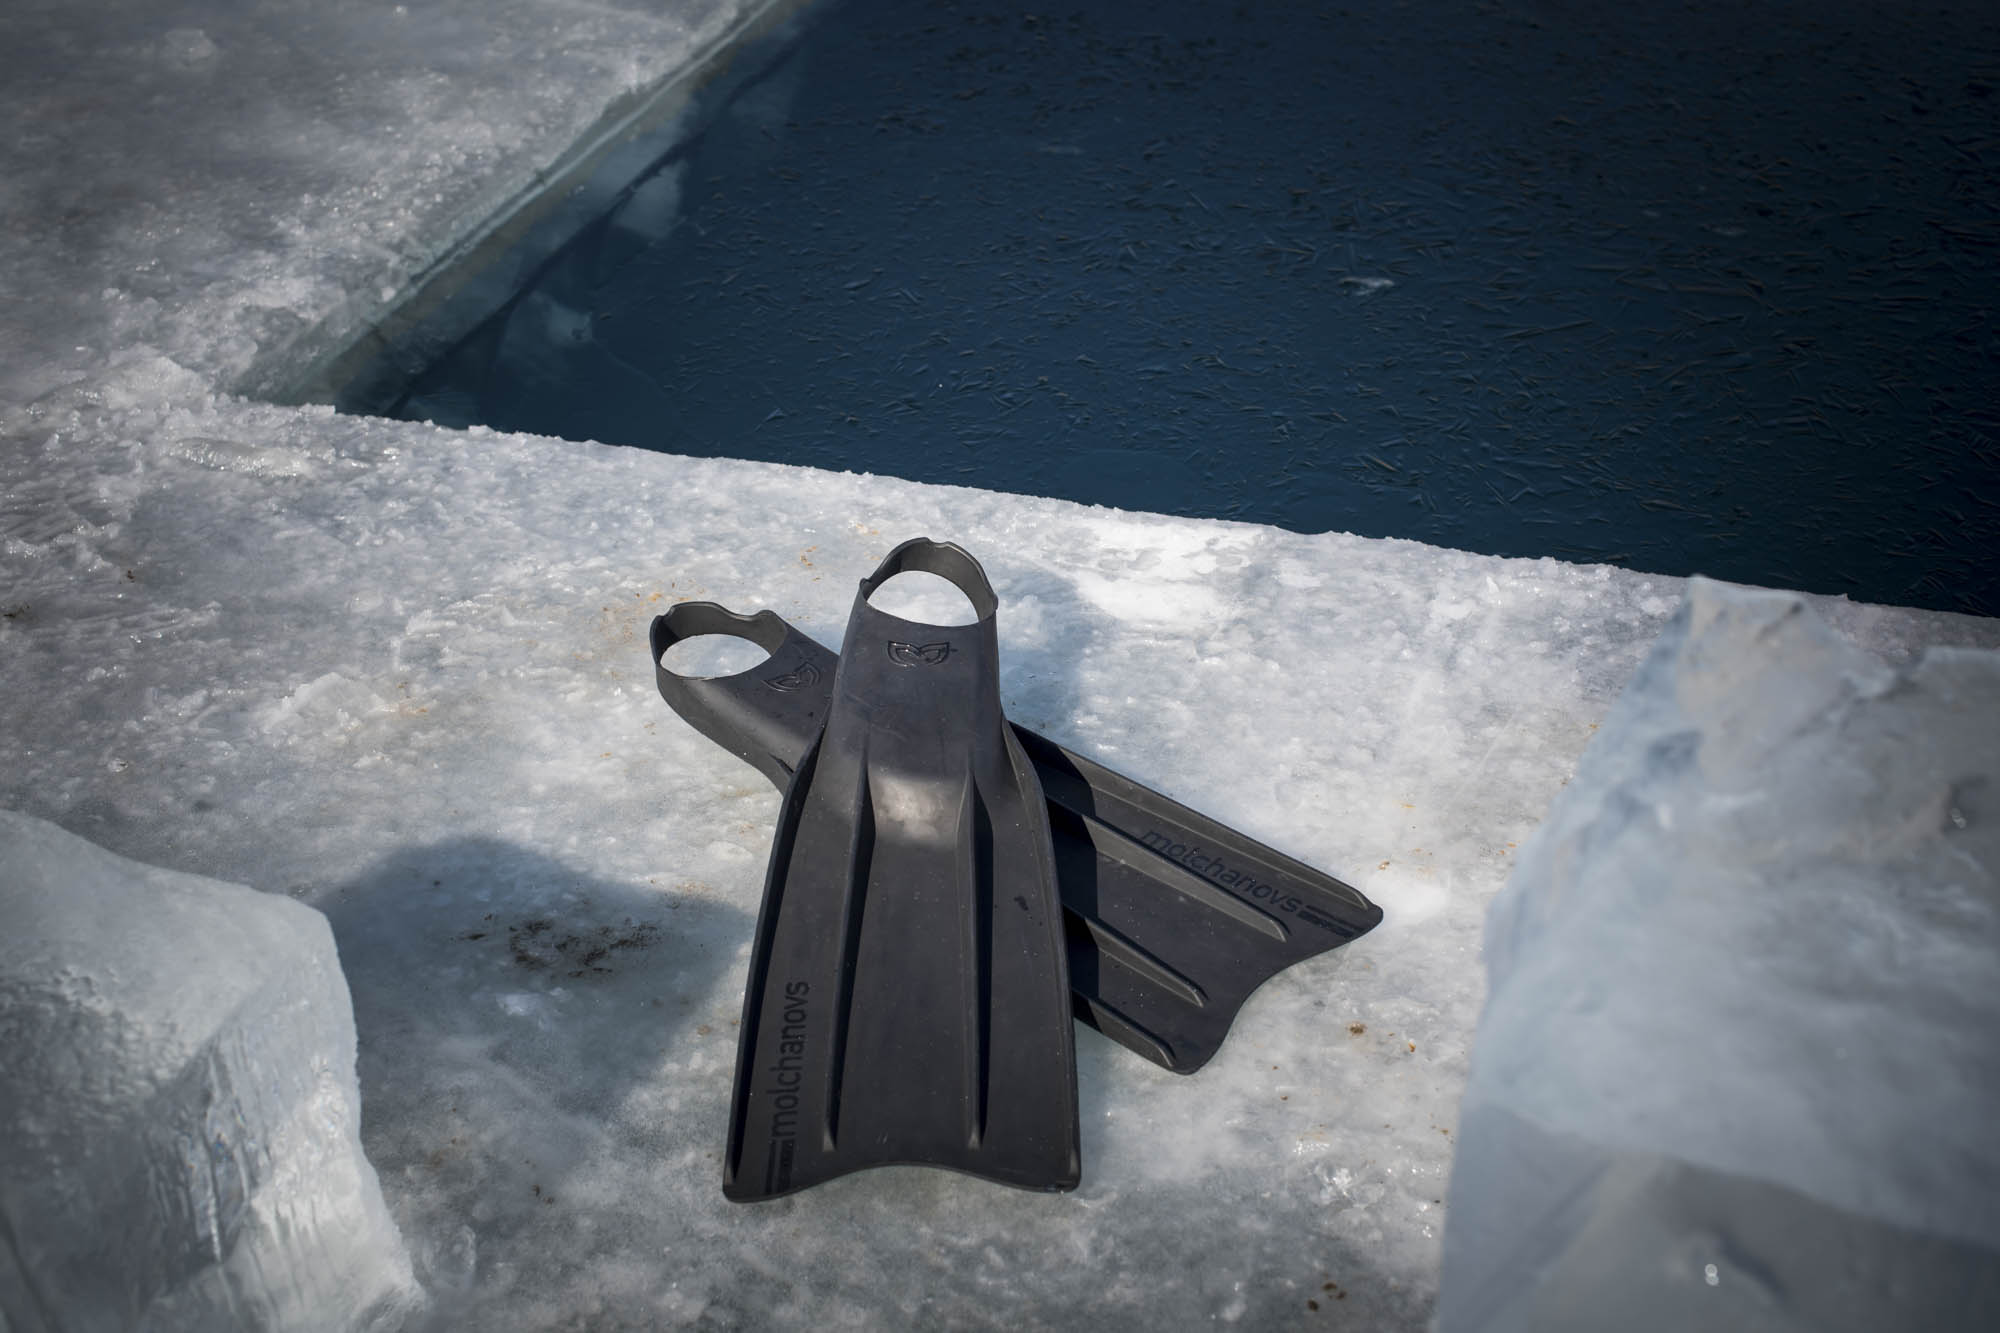 Black CORE Silicone bifins on the ice